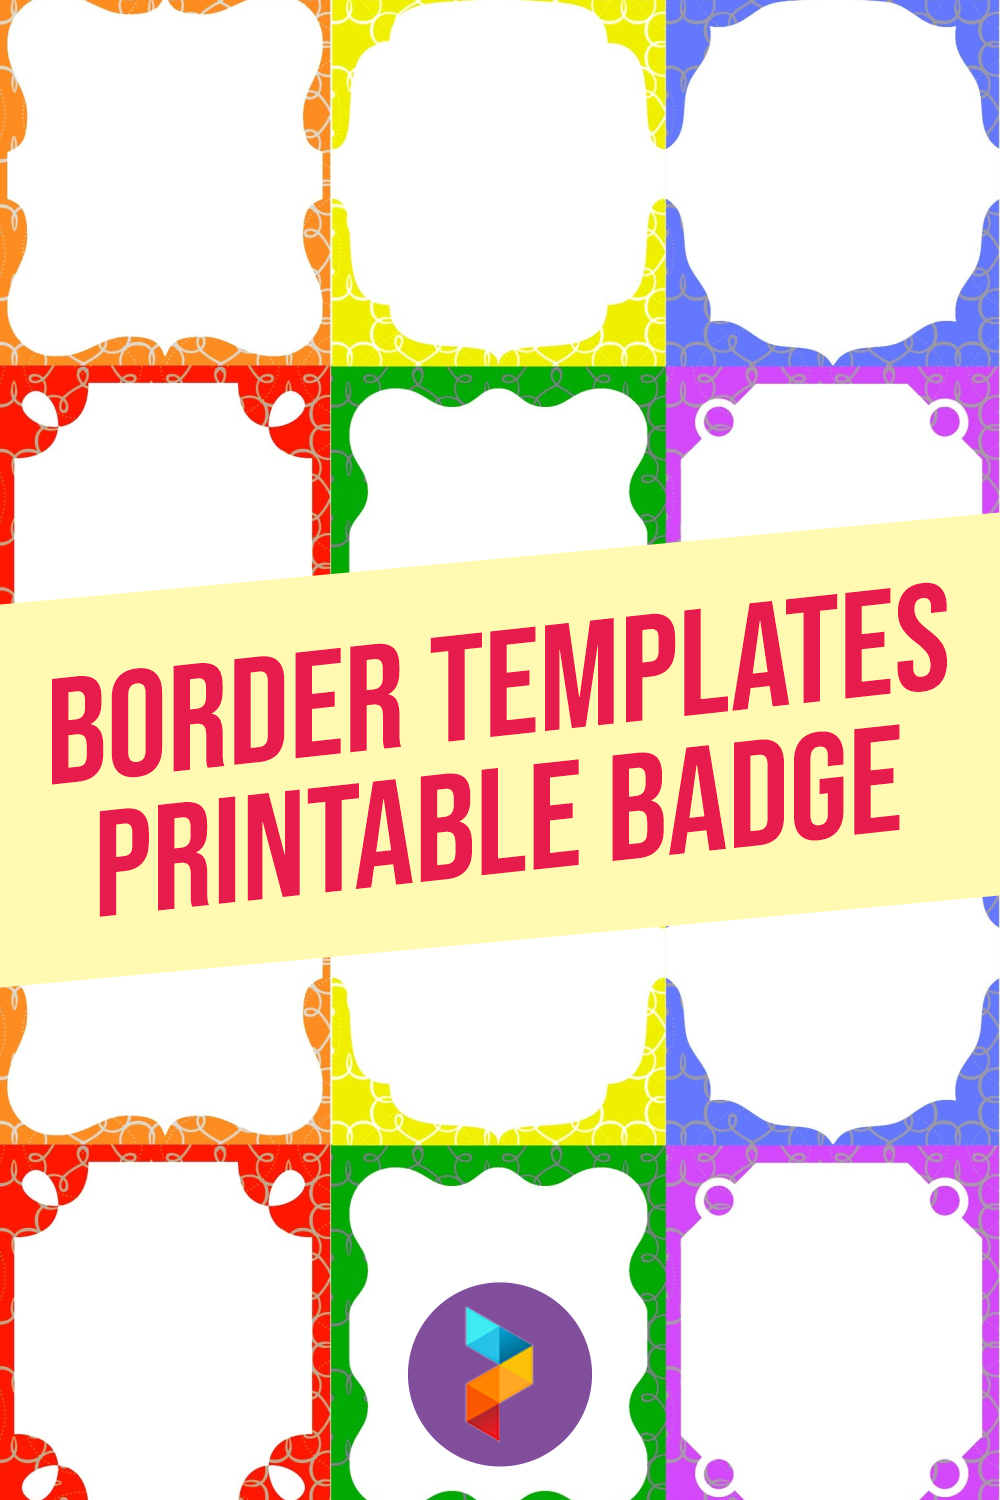 Border Templates Printable Badge